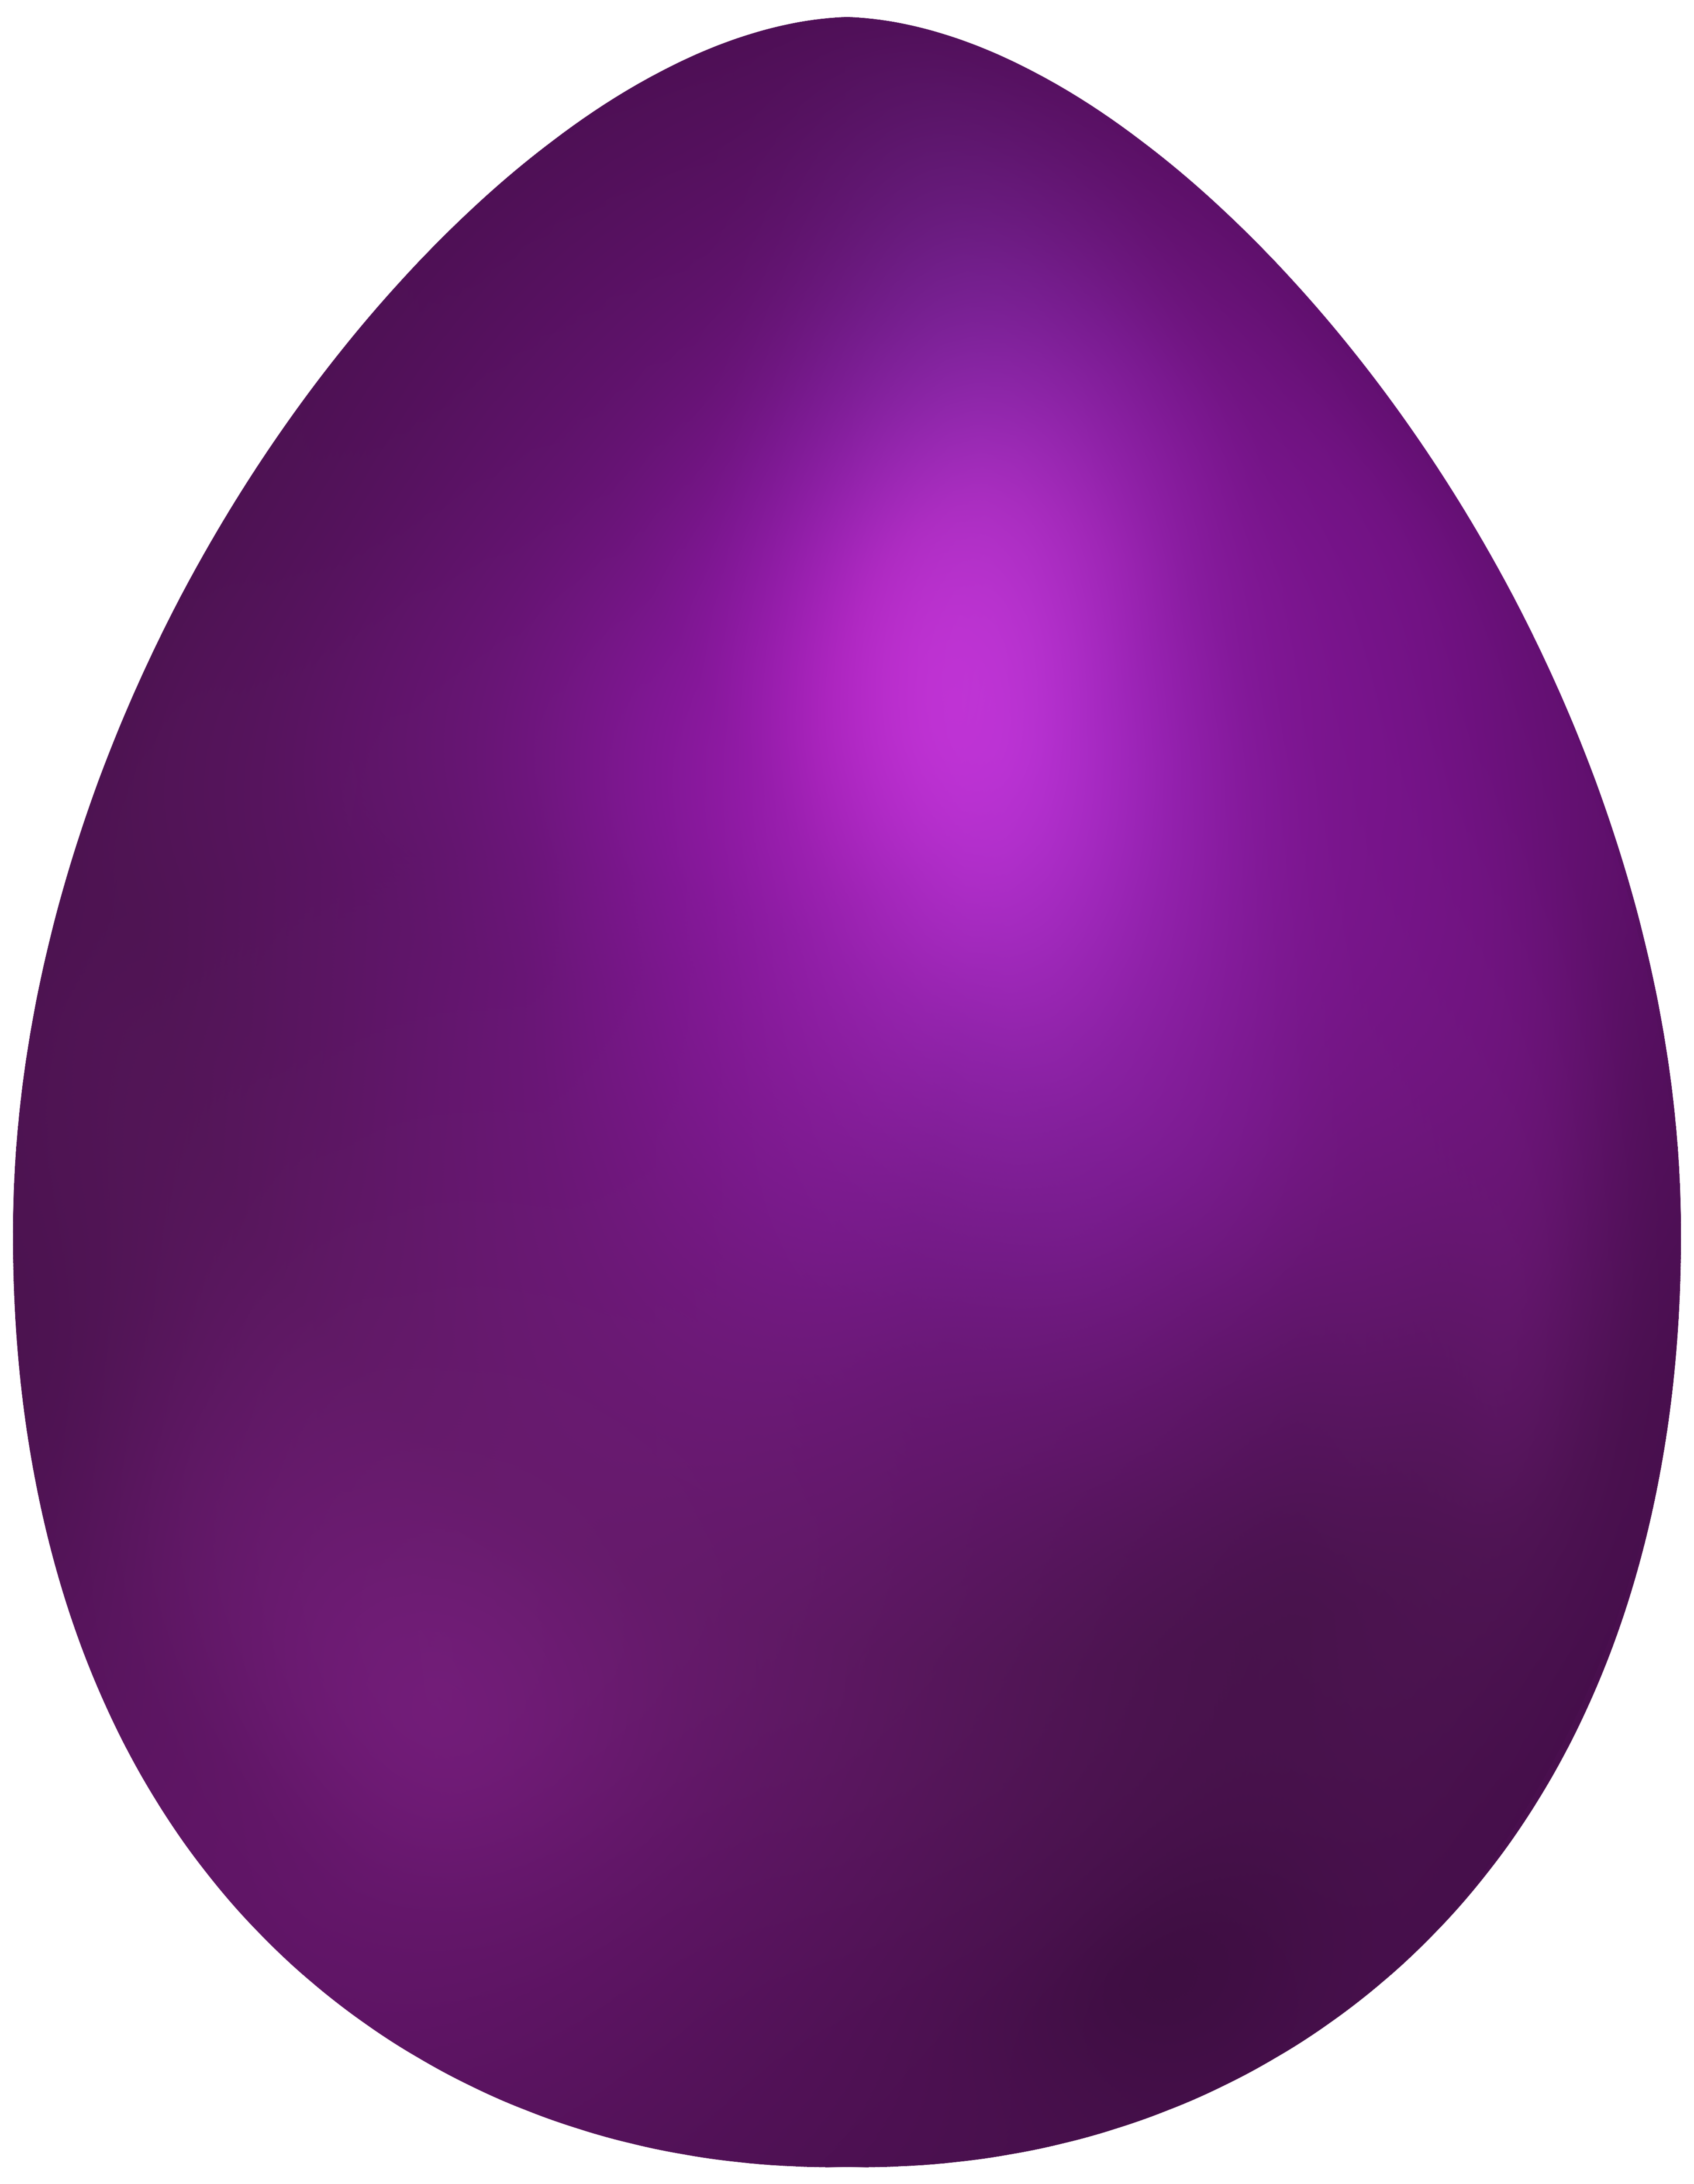 Egg PNG Transparent Images - PNG All